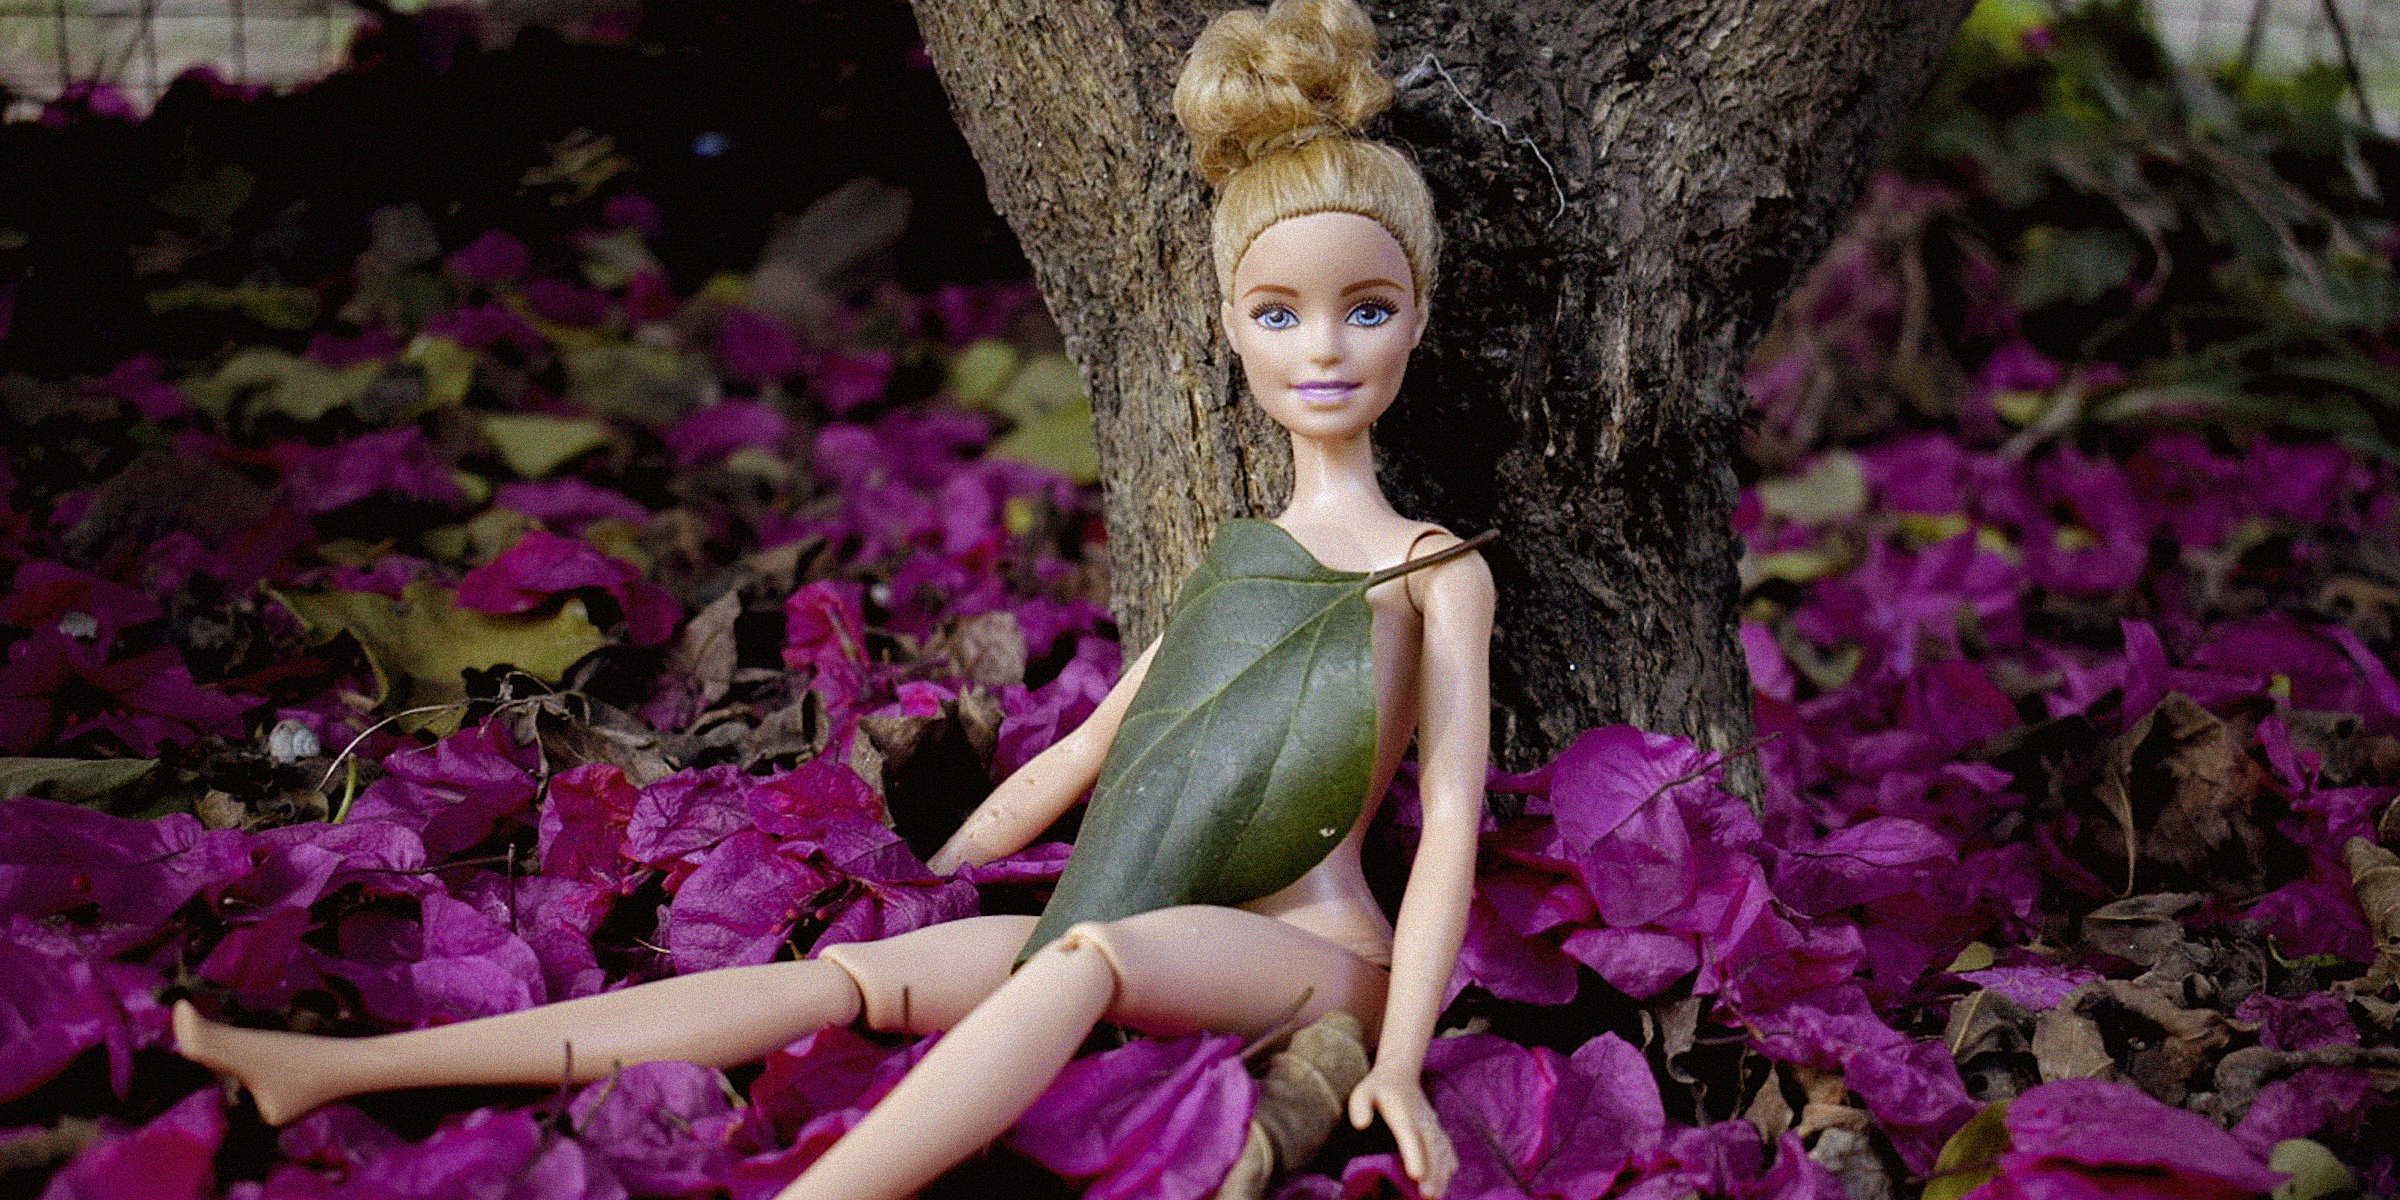 Barbie resting on a tree trunk | Source: Unsplash